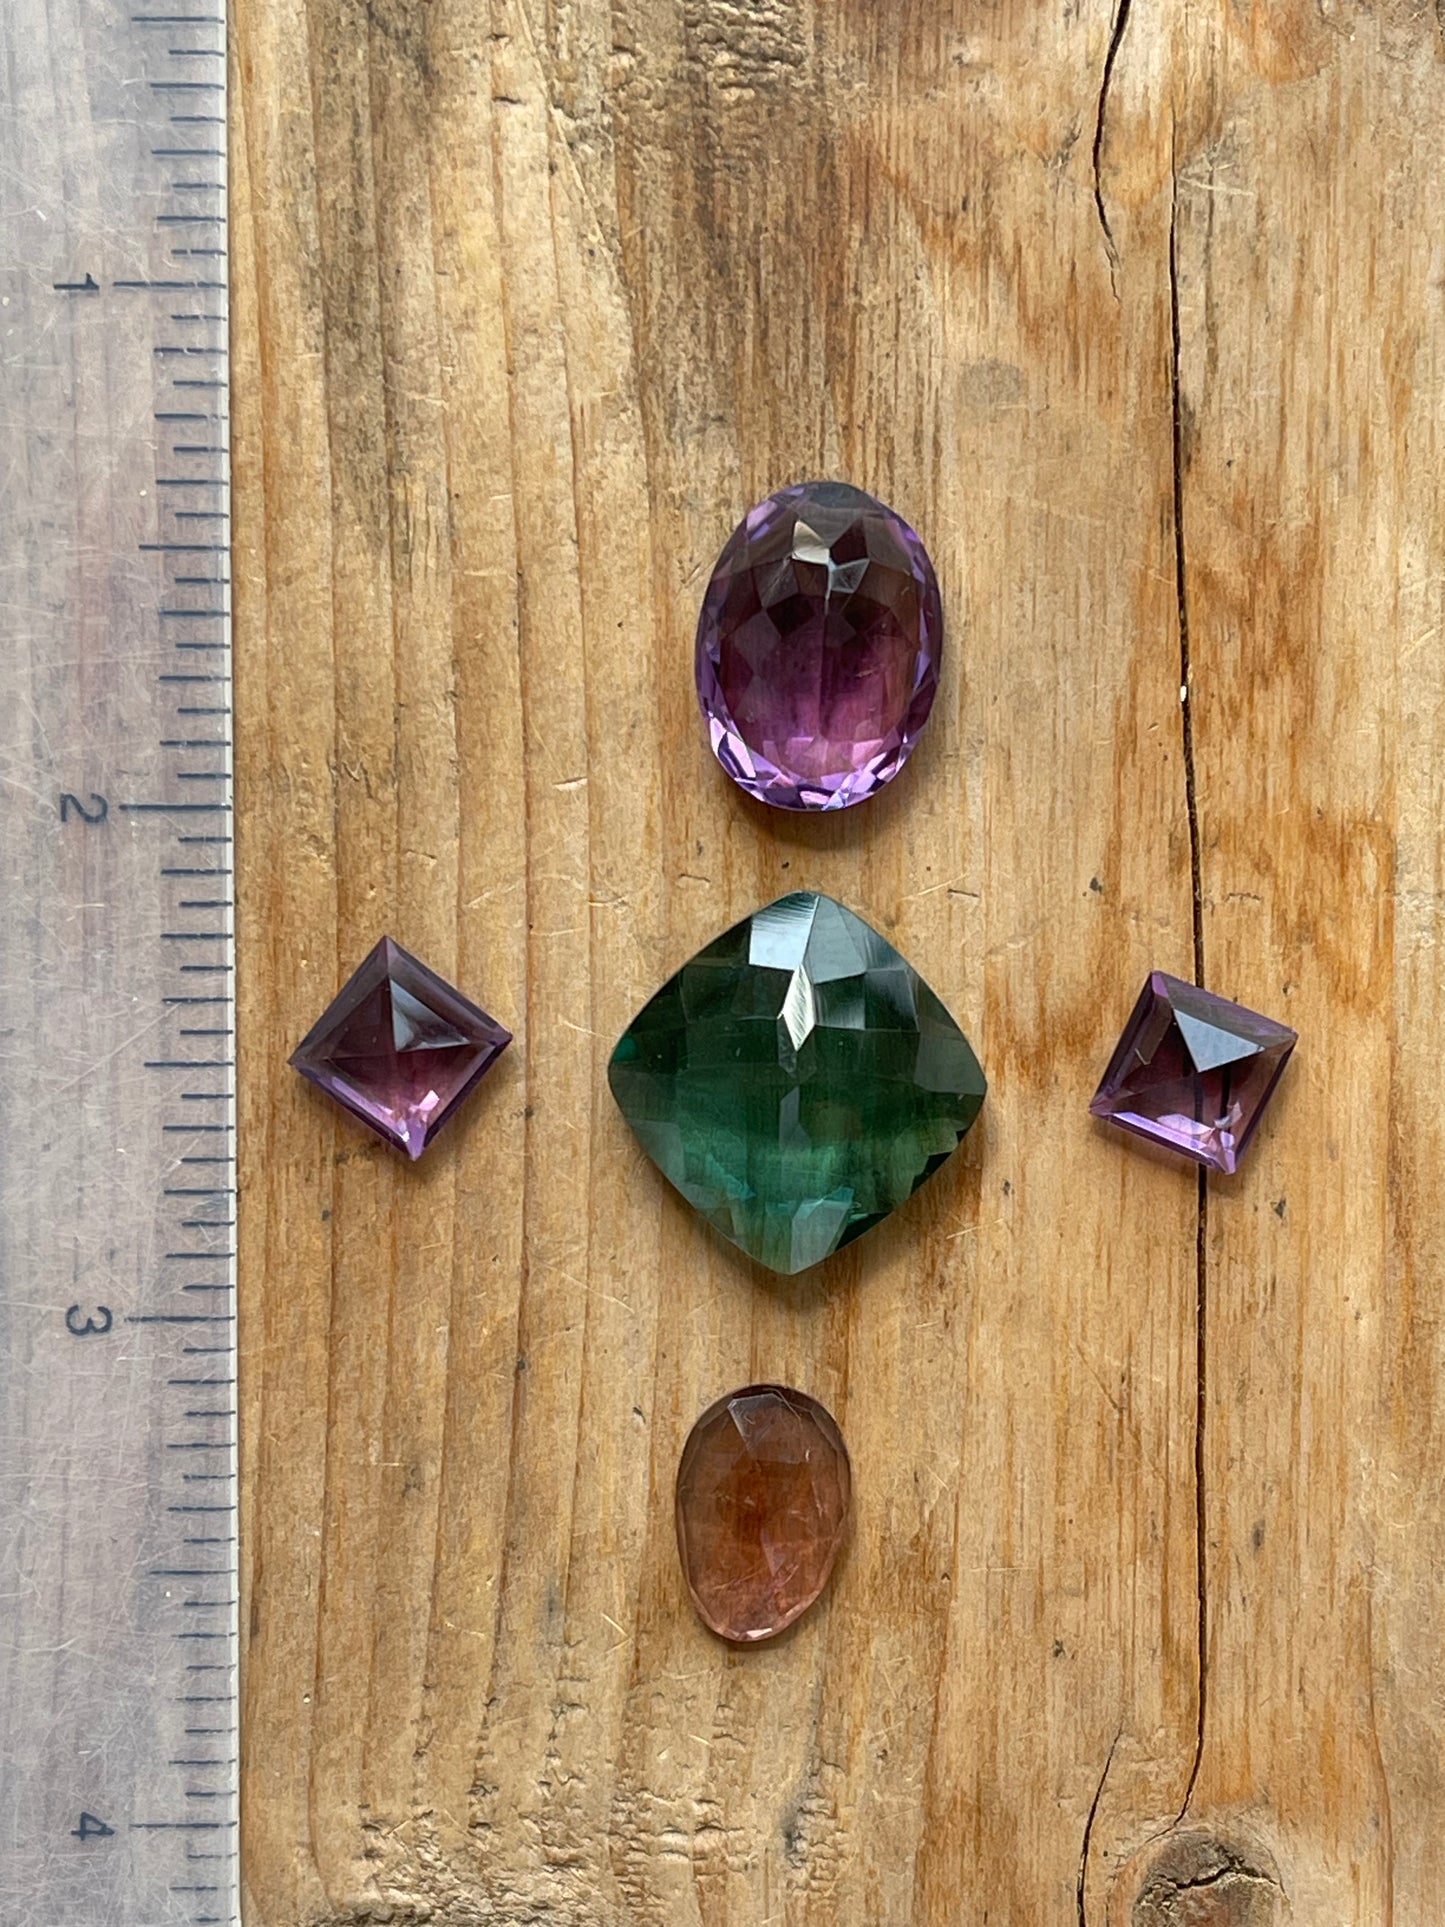 Gemstone Collection 70: Fluorite, Amethyst, Rainbow Tourmaline - 28CT